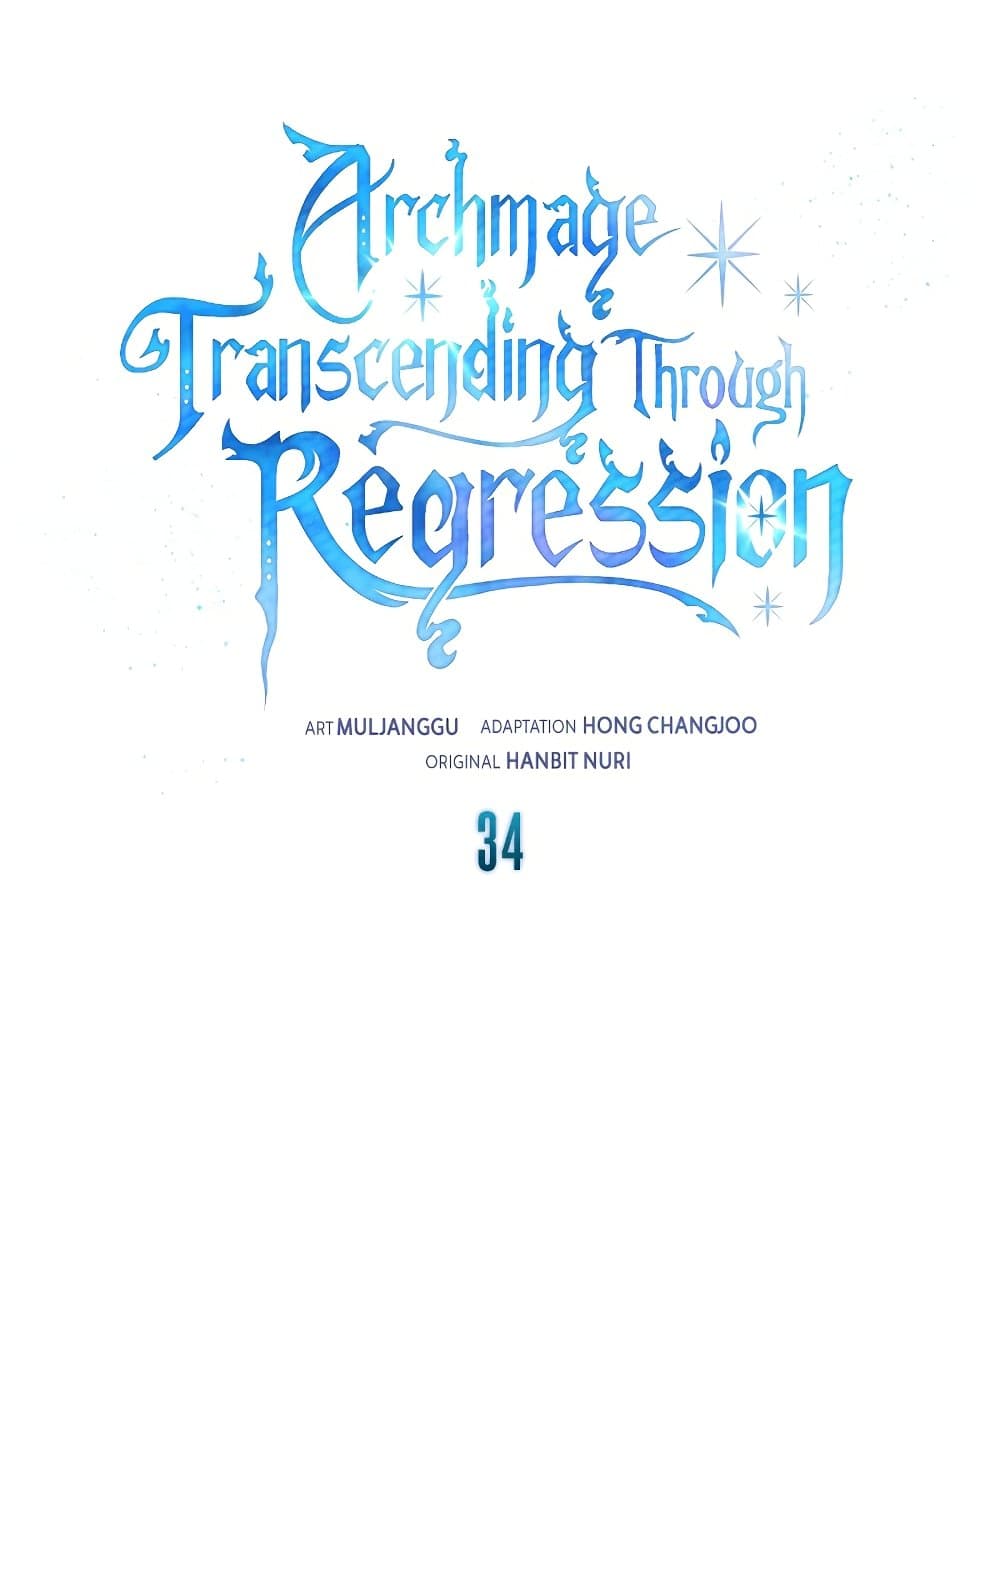 Archmage Transcending Through Regression 34 (2)